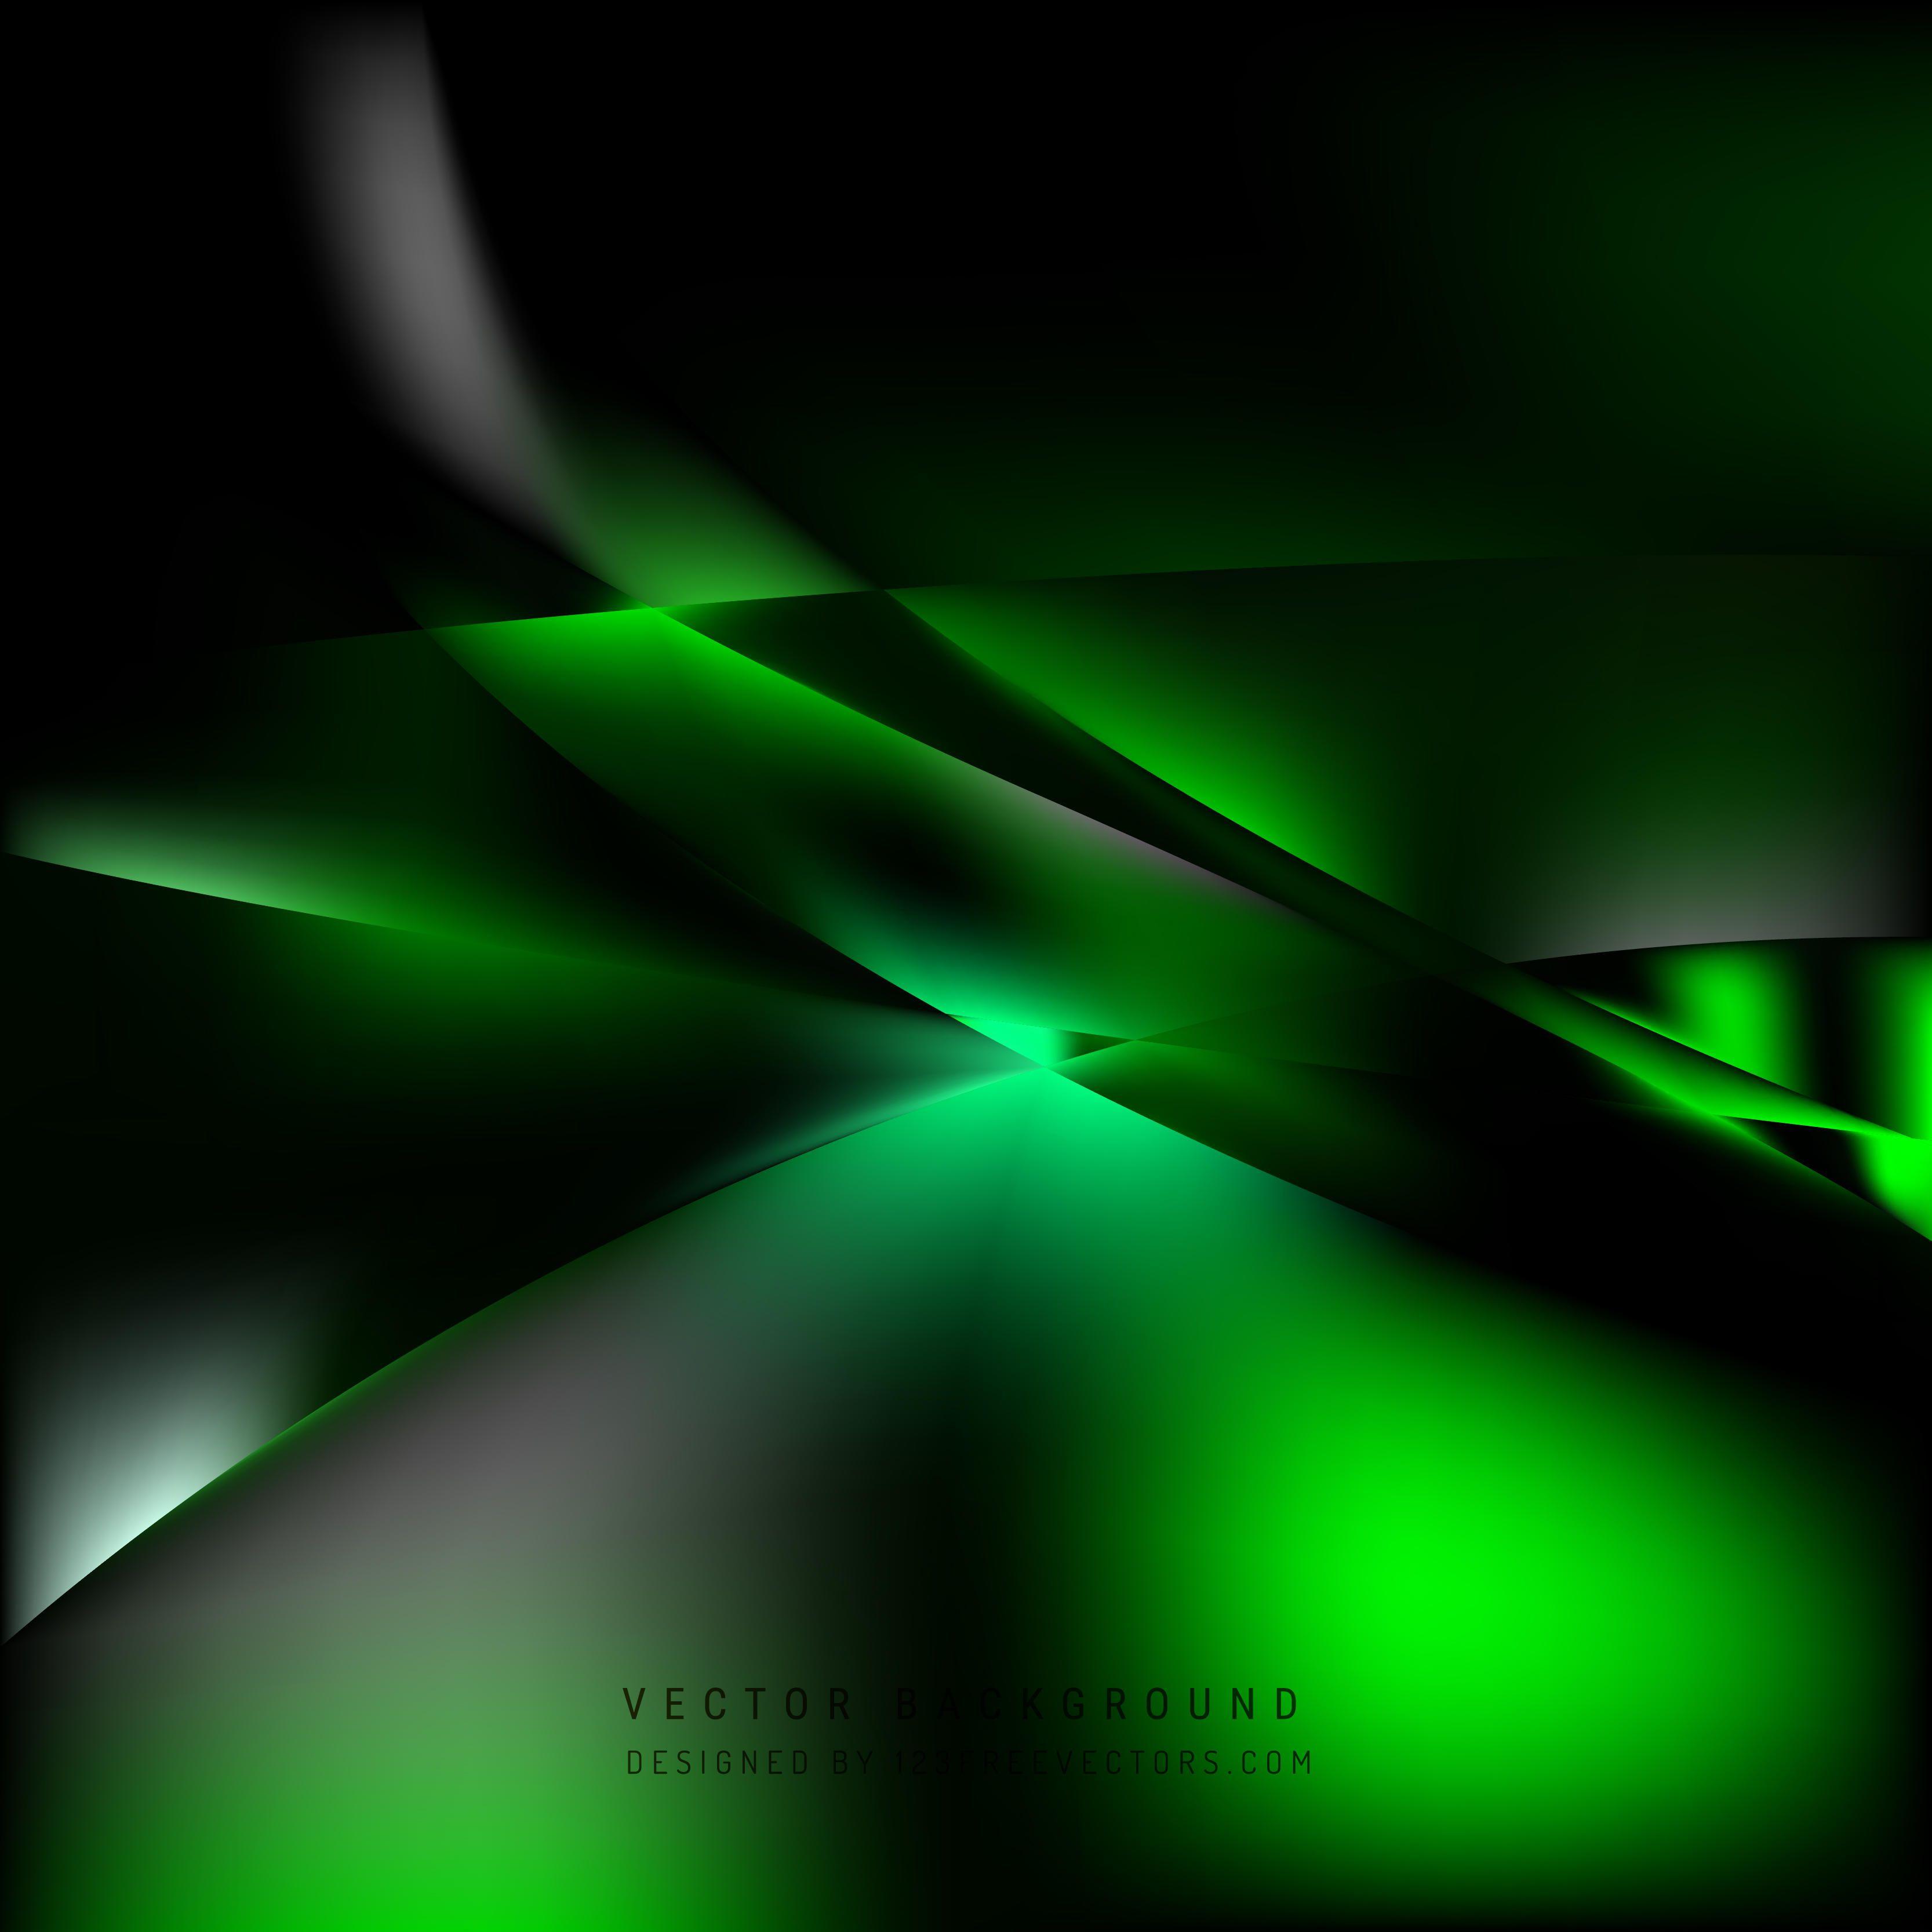 Black and Green Background Vectors. Download Free Vector Art